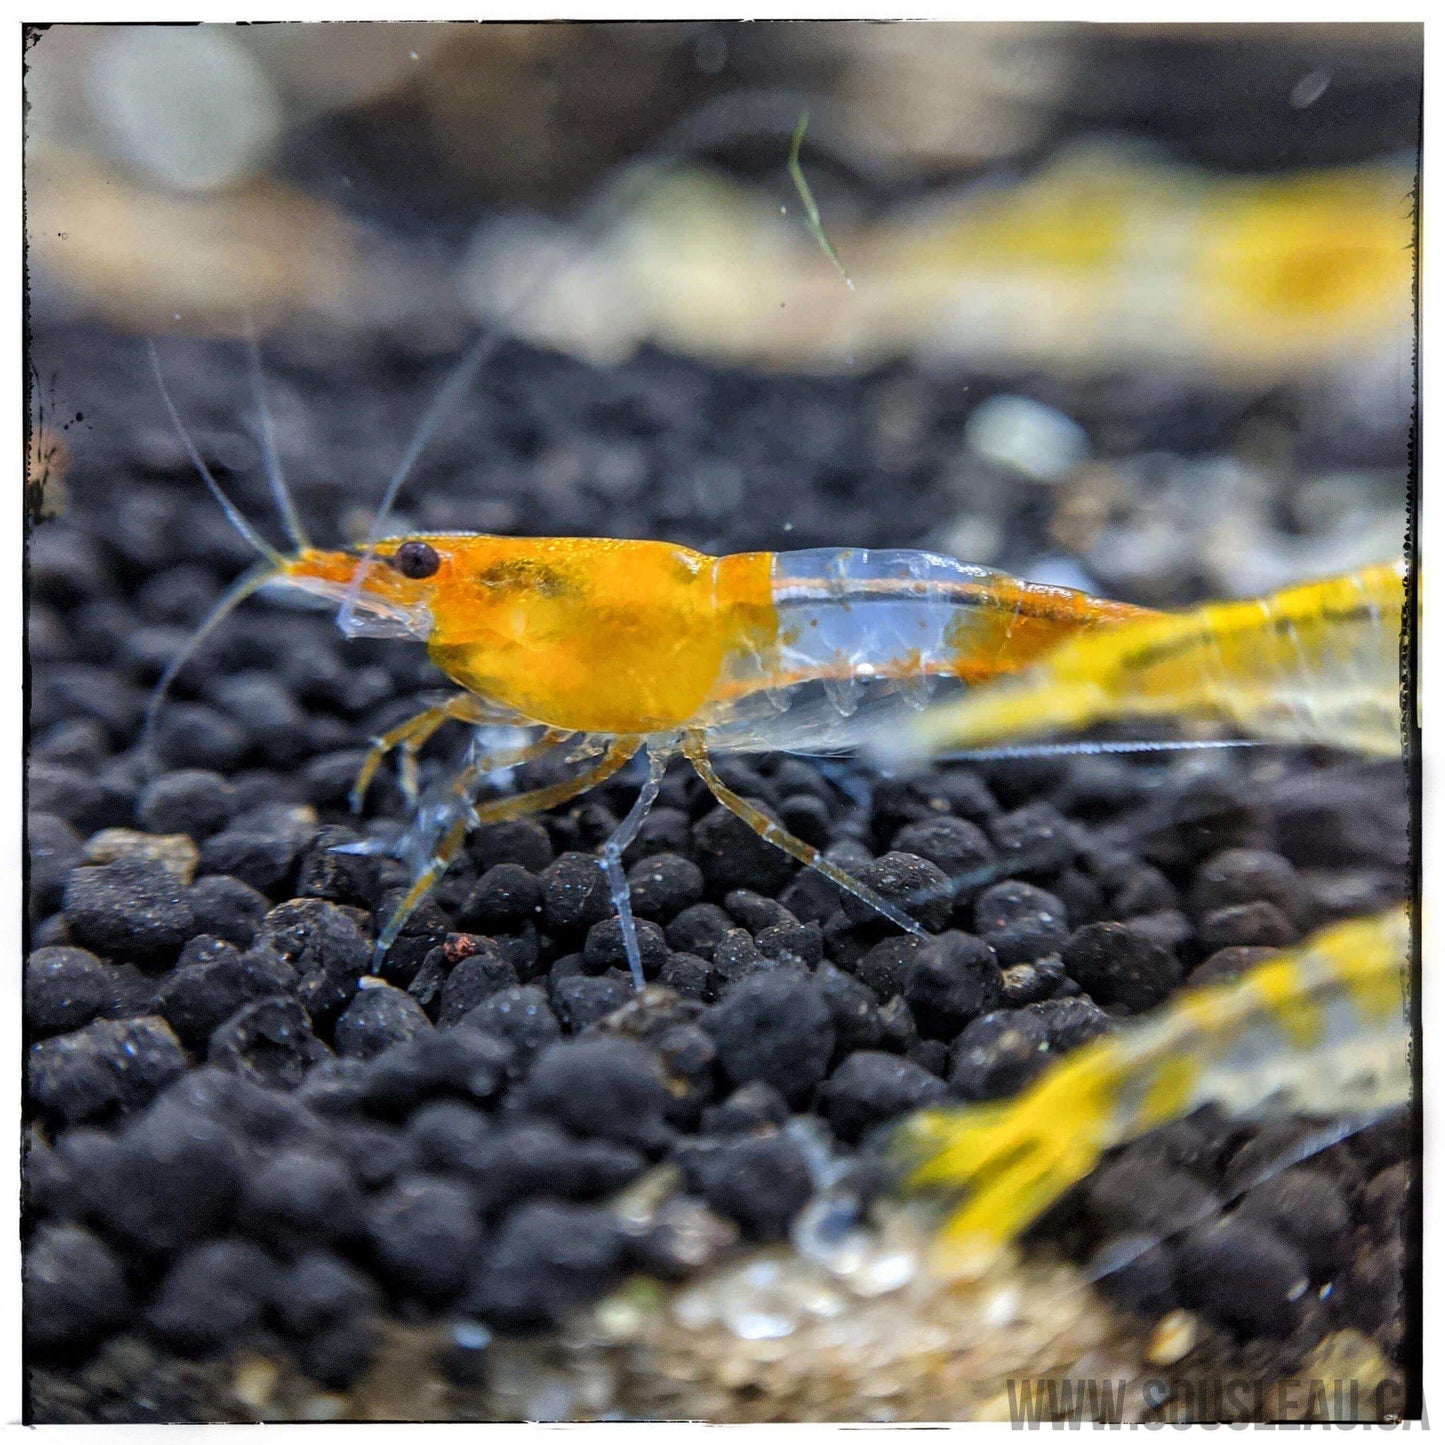 Orange/Yellow Rili Shrimp Sousleau Aquarium